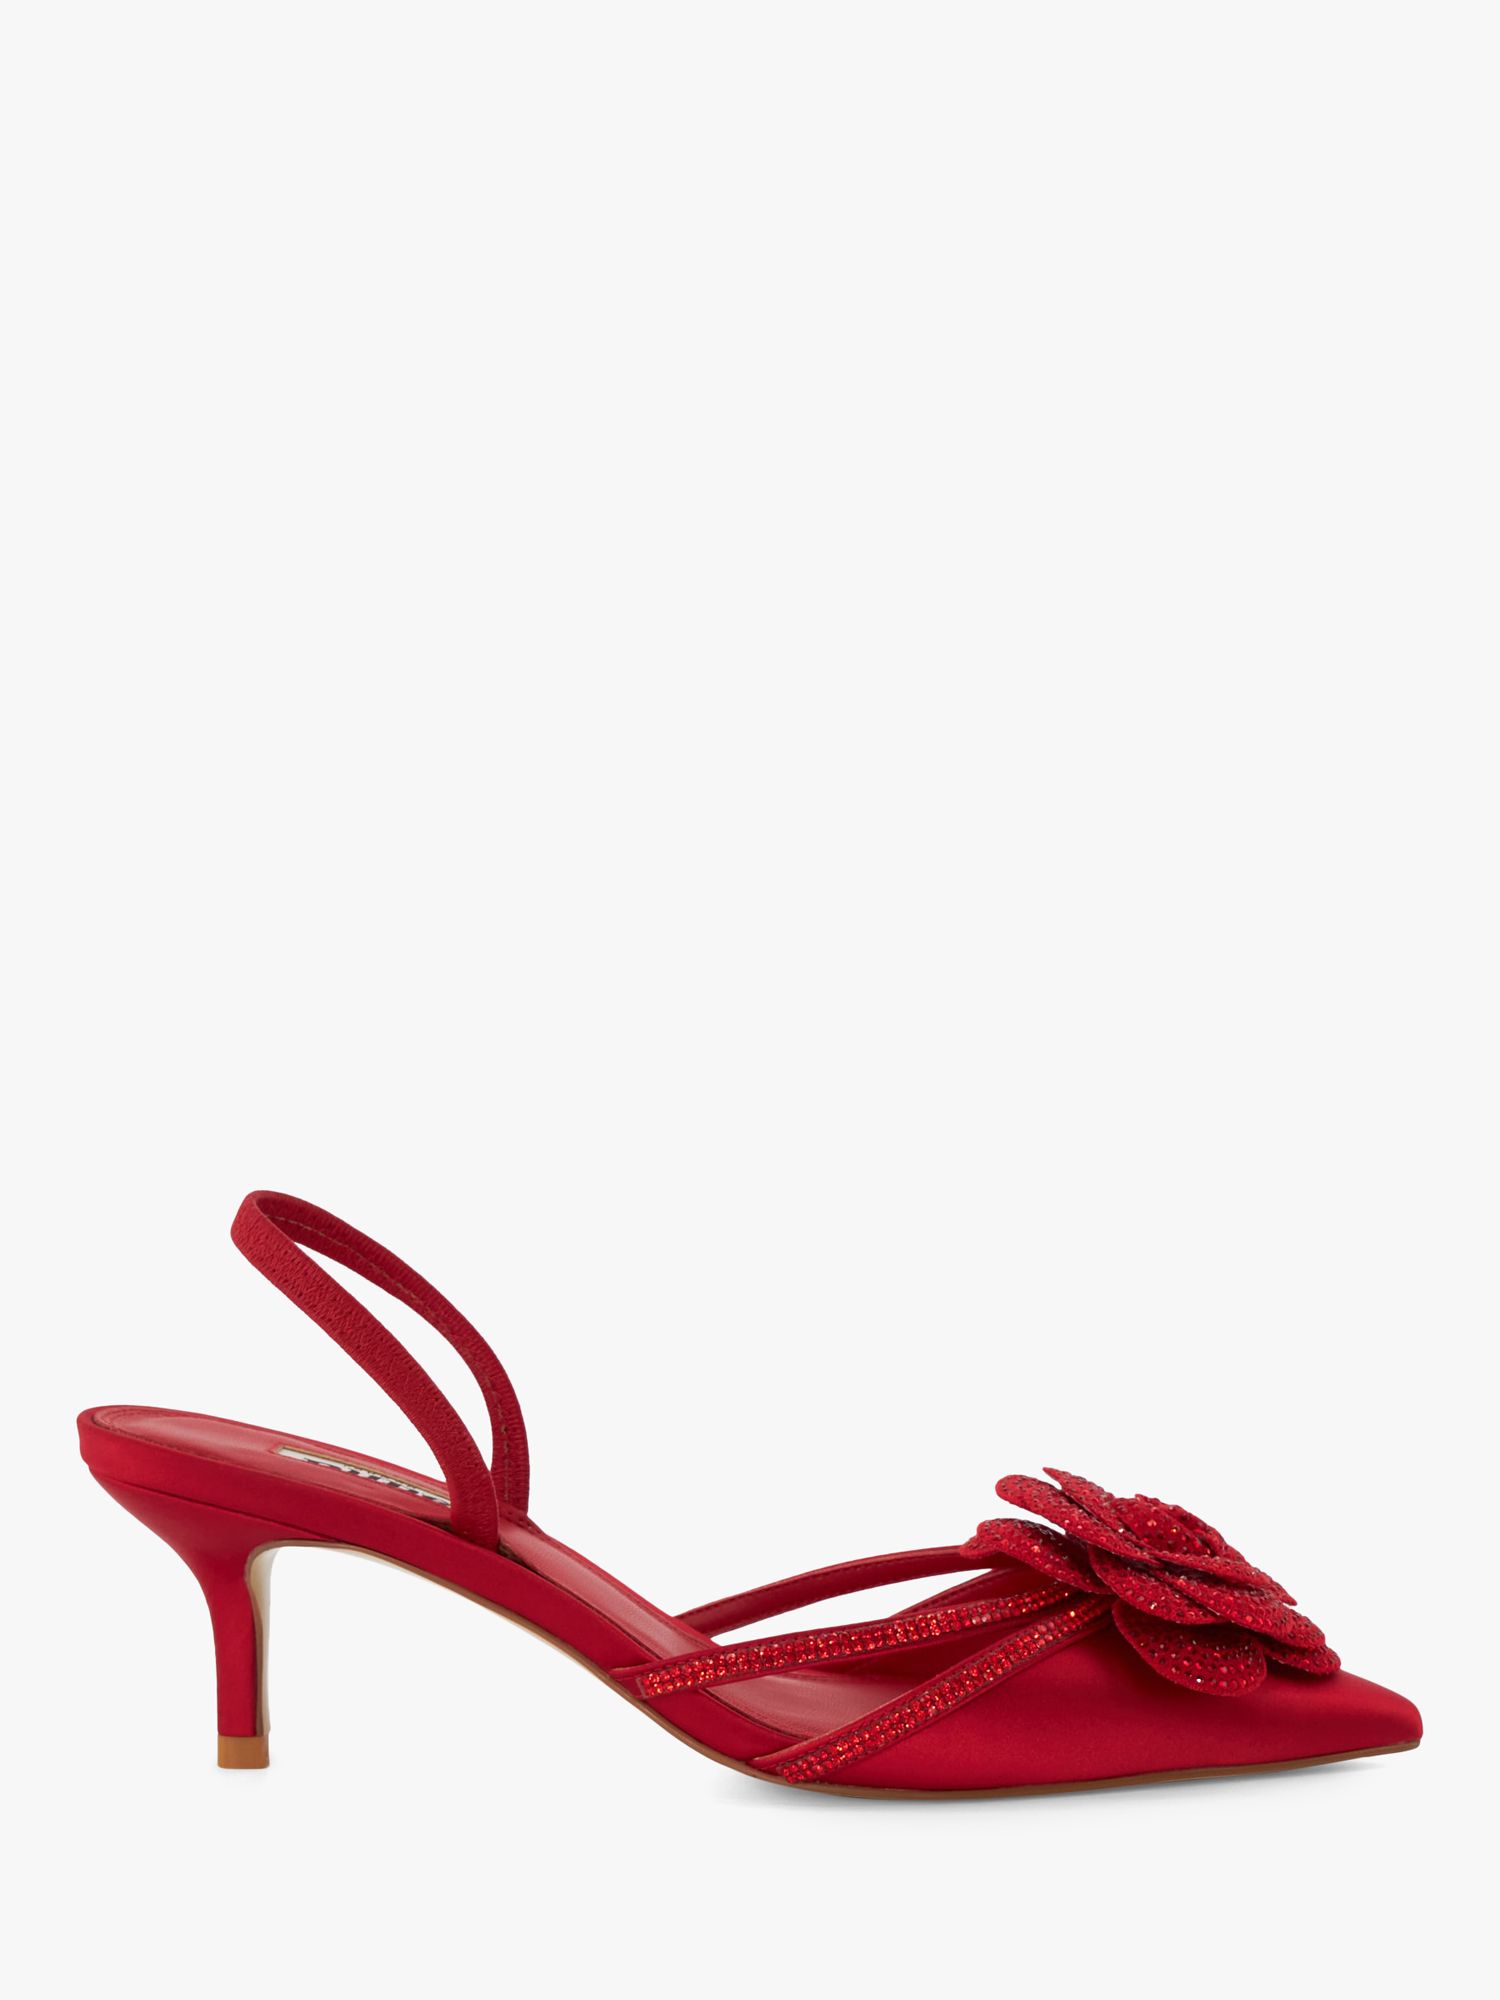 Dune Dancehall Satin Stiletto Court Shoes, Red Satin at John Lewis ...